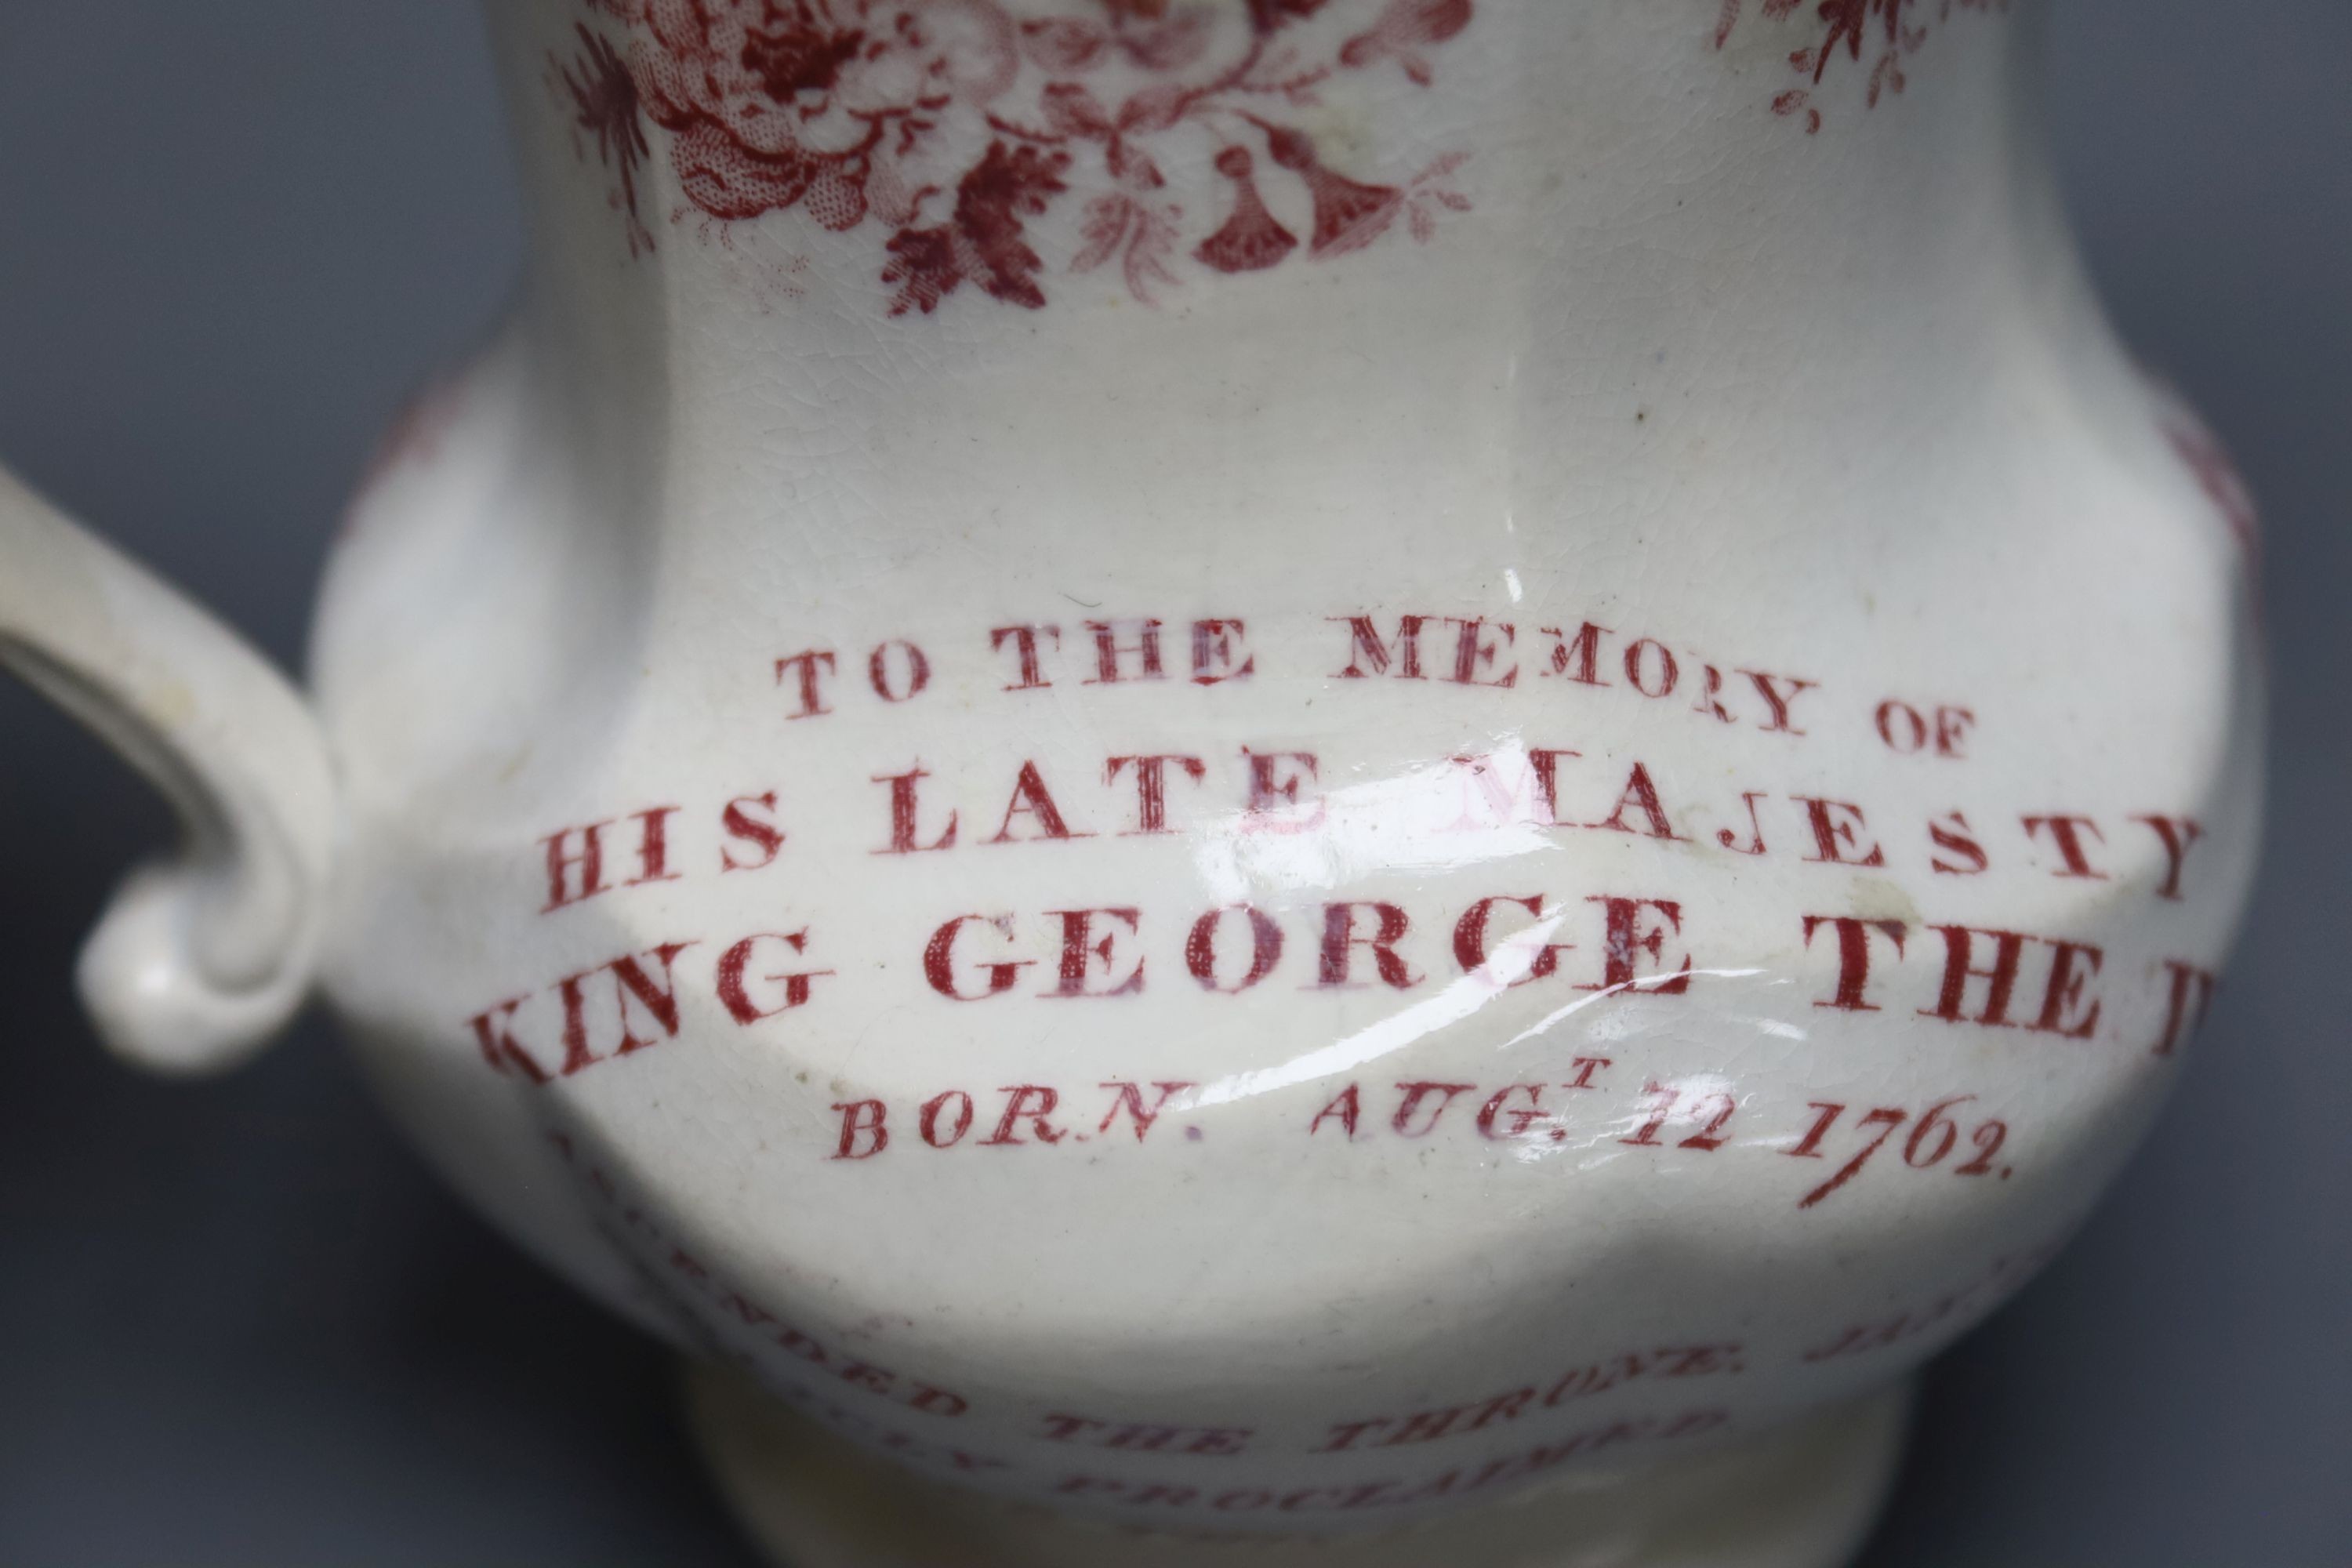 A George IV commemorative pottery jug, 14cm tall